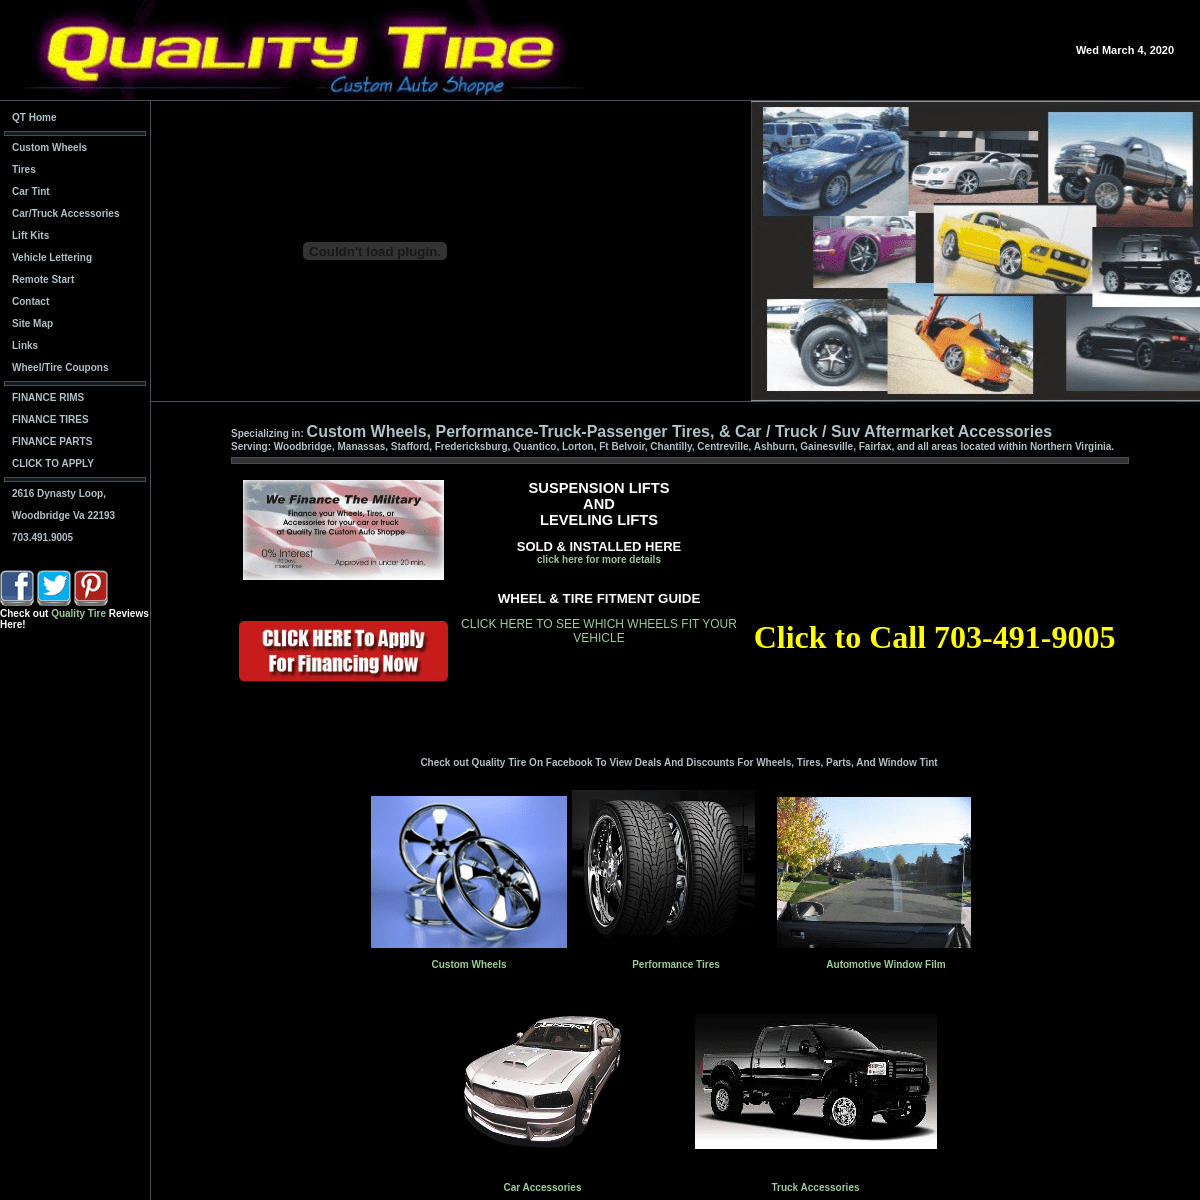 A complete backup of qualitytire.com